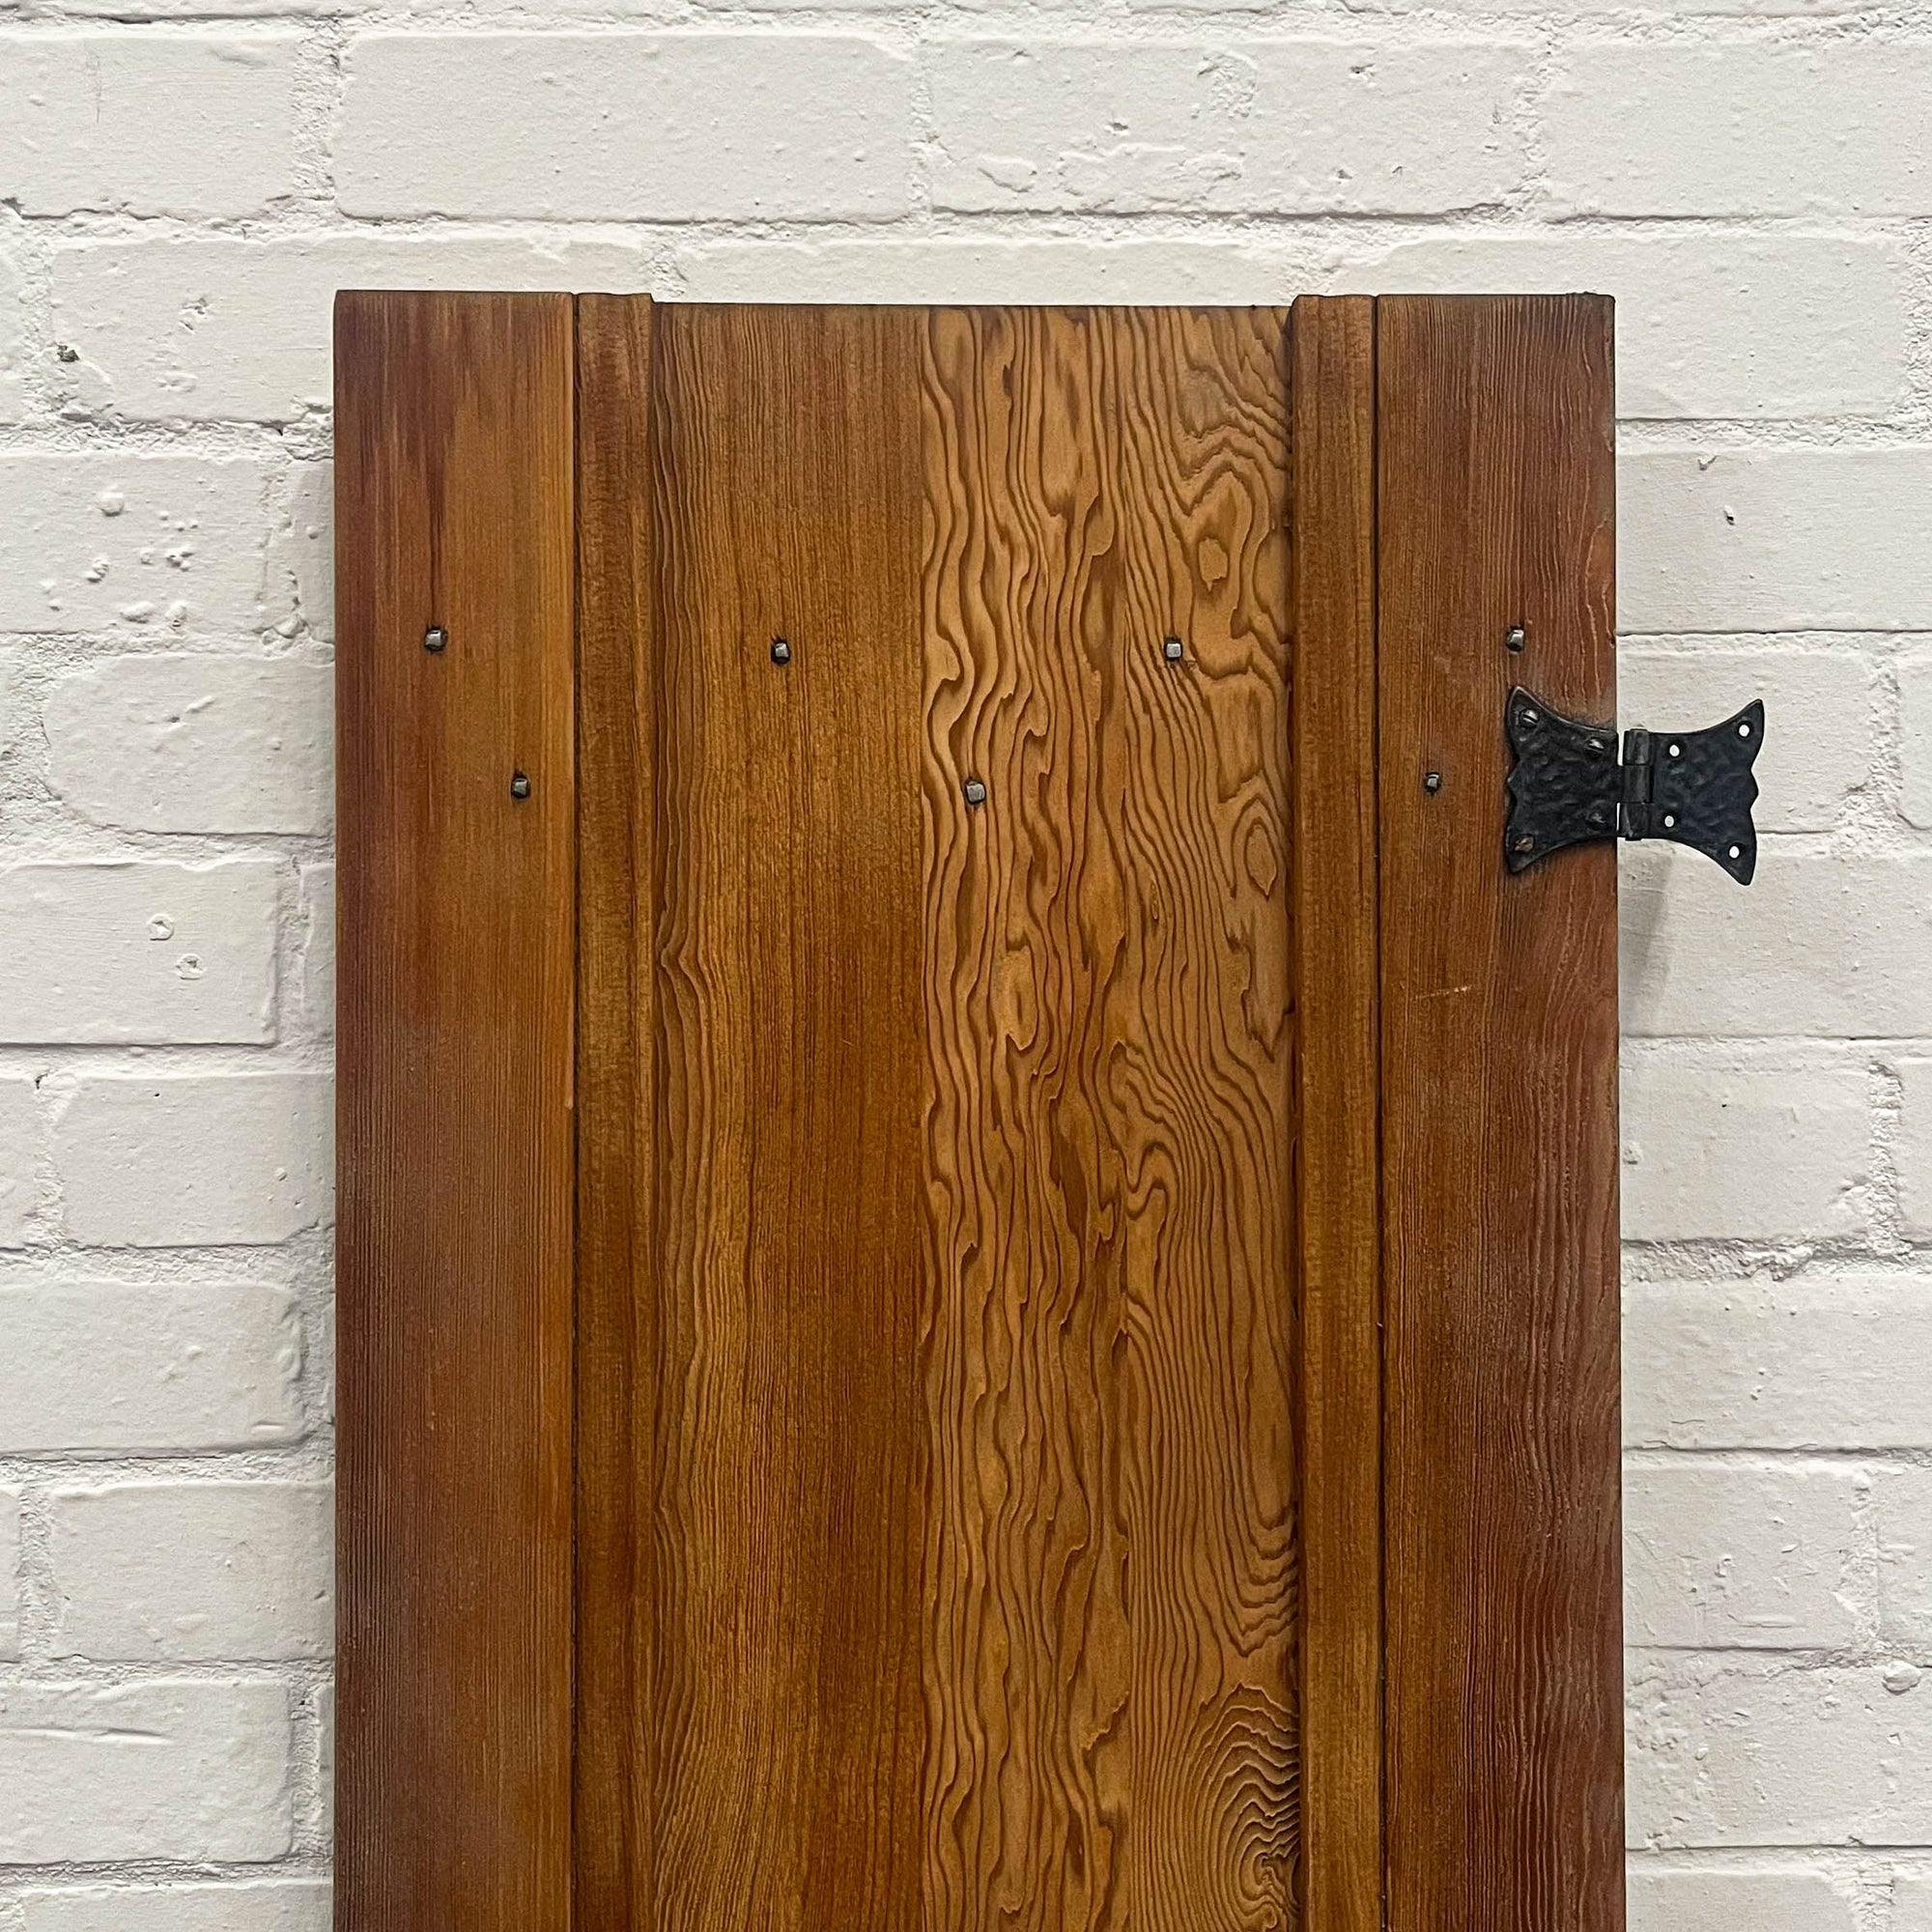 Antique Victorian Pine Latch Door - 185cm x 44cm | The Architectural Forum